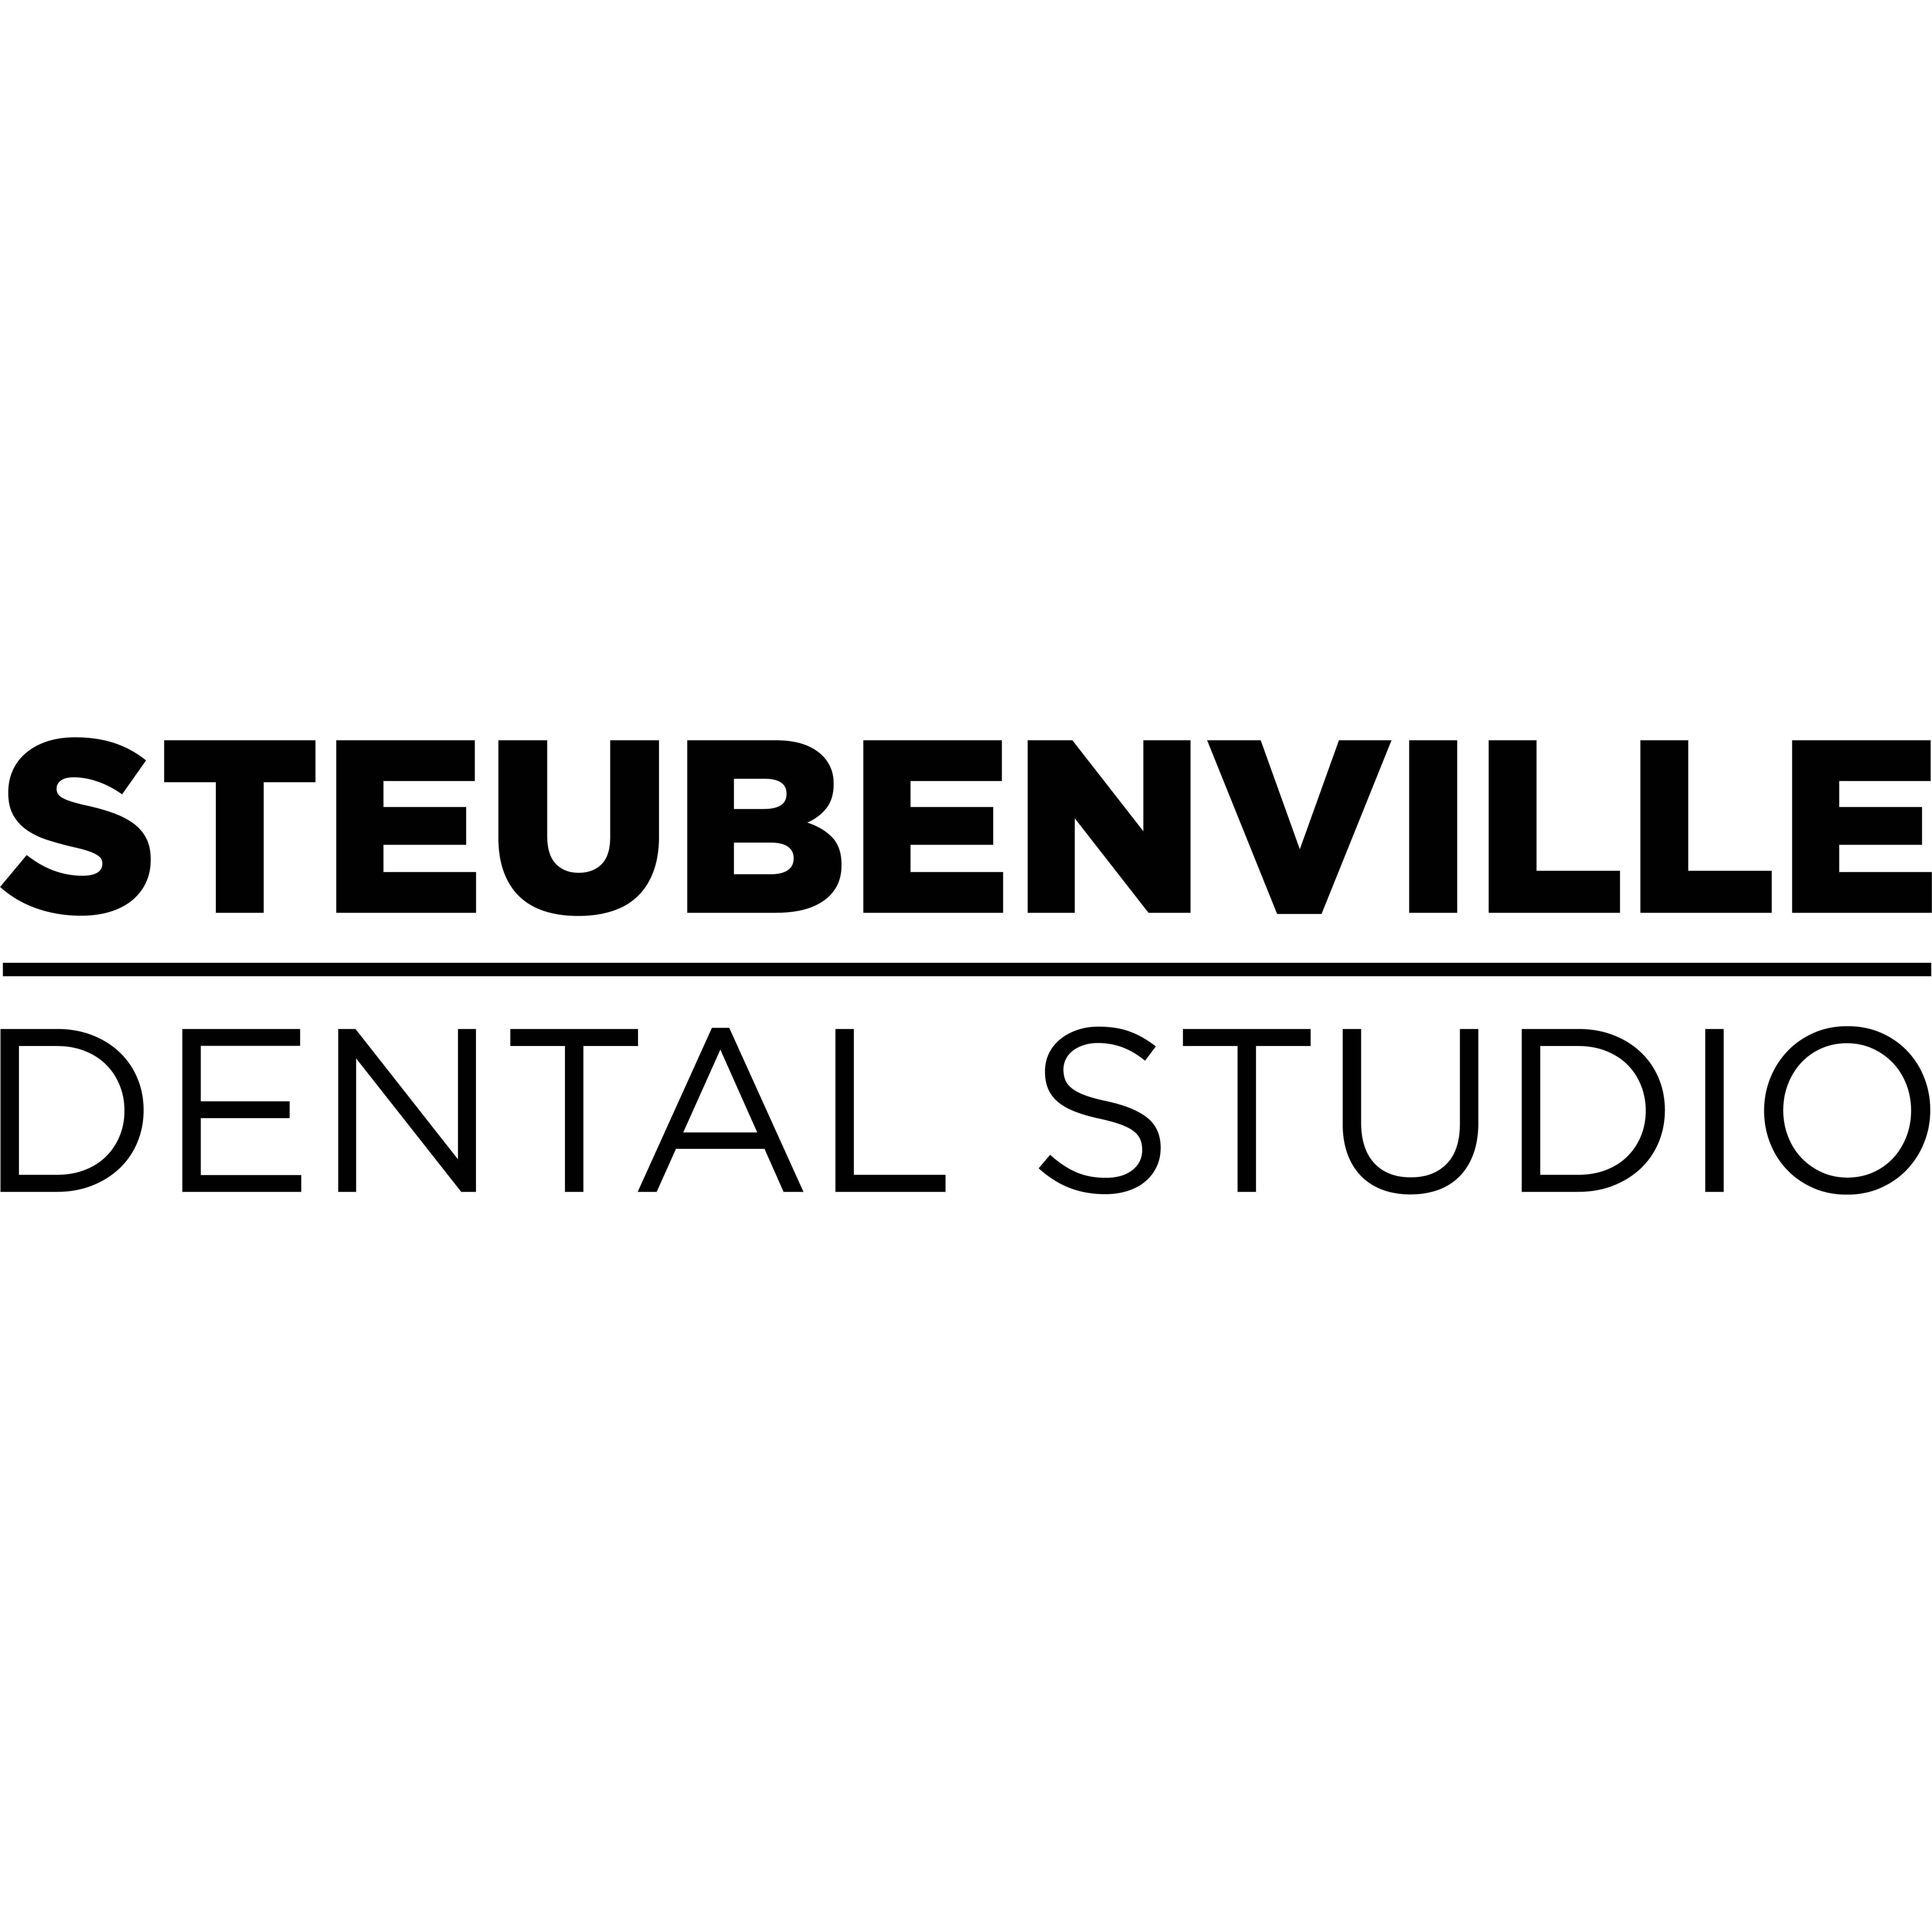 Steubenville Dental Studio - Steubenville, OH 43952 - (740)264-6811 | ShowMeLocal.com